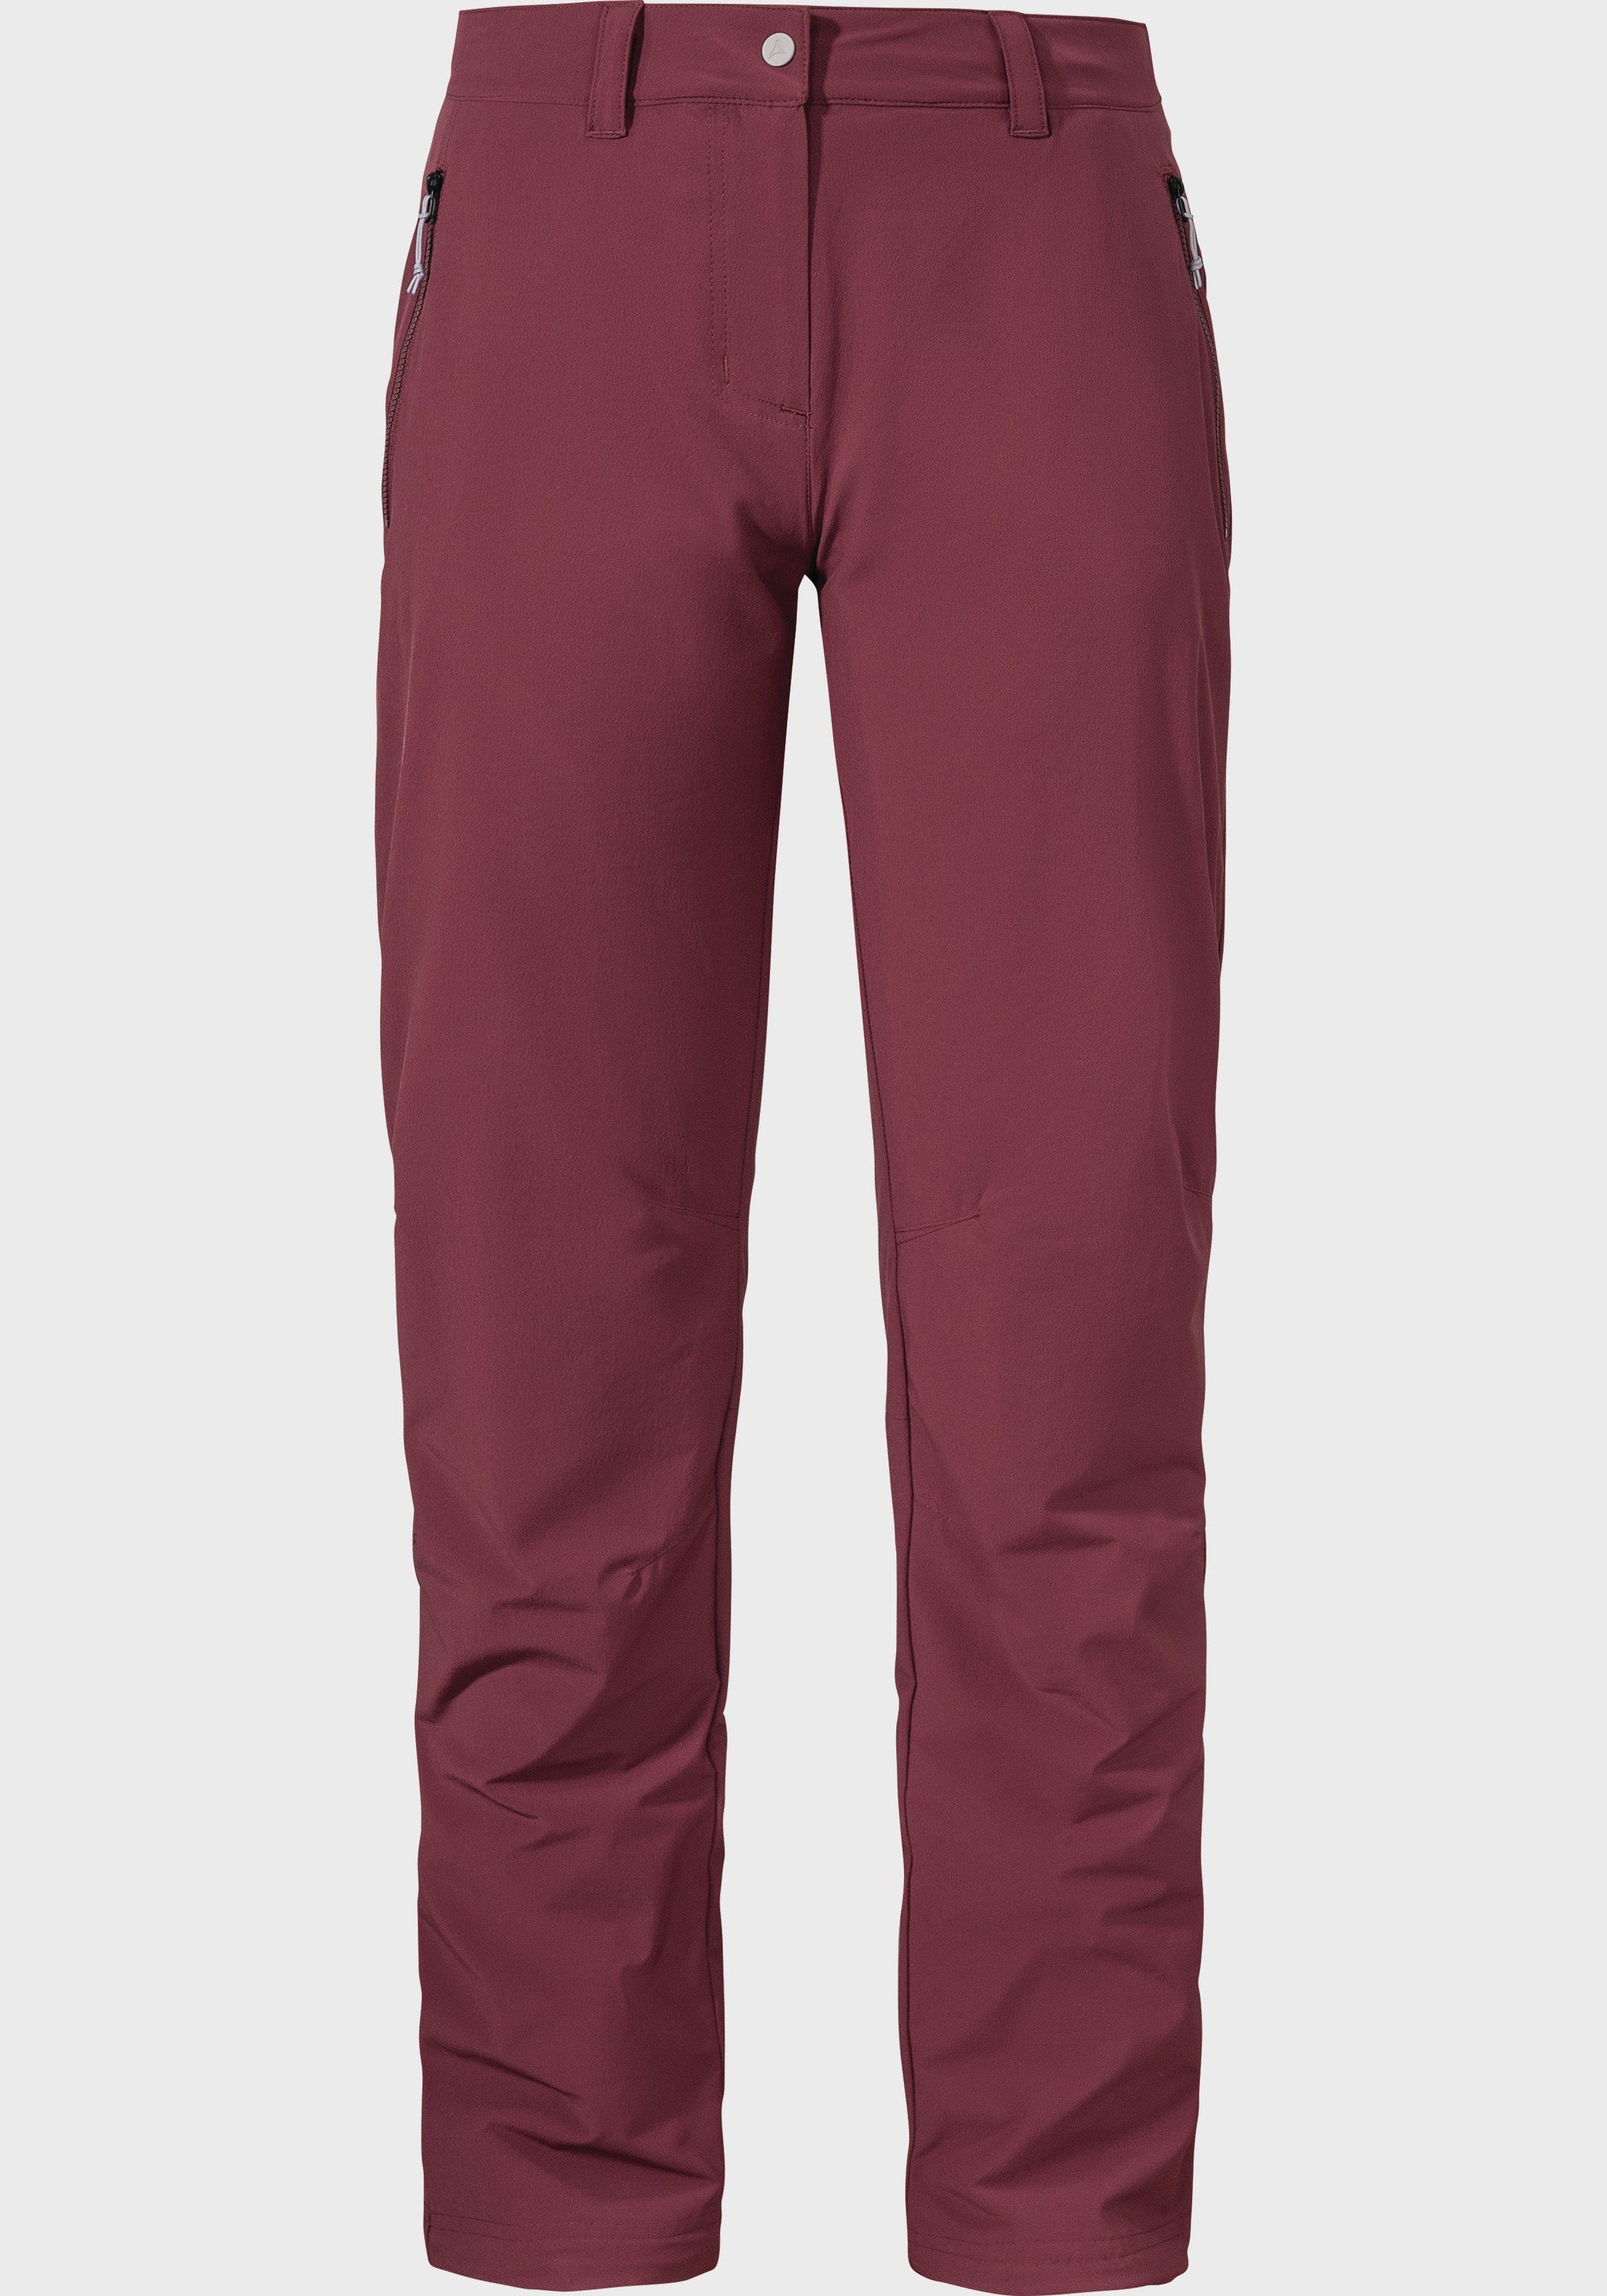 Warm Engadin1 L rot Schöffel Outdoorhose Pants